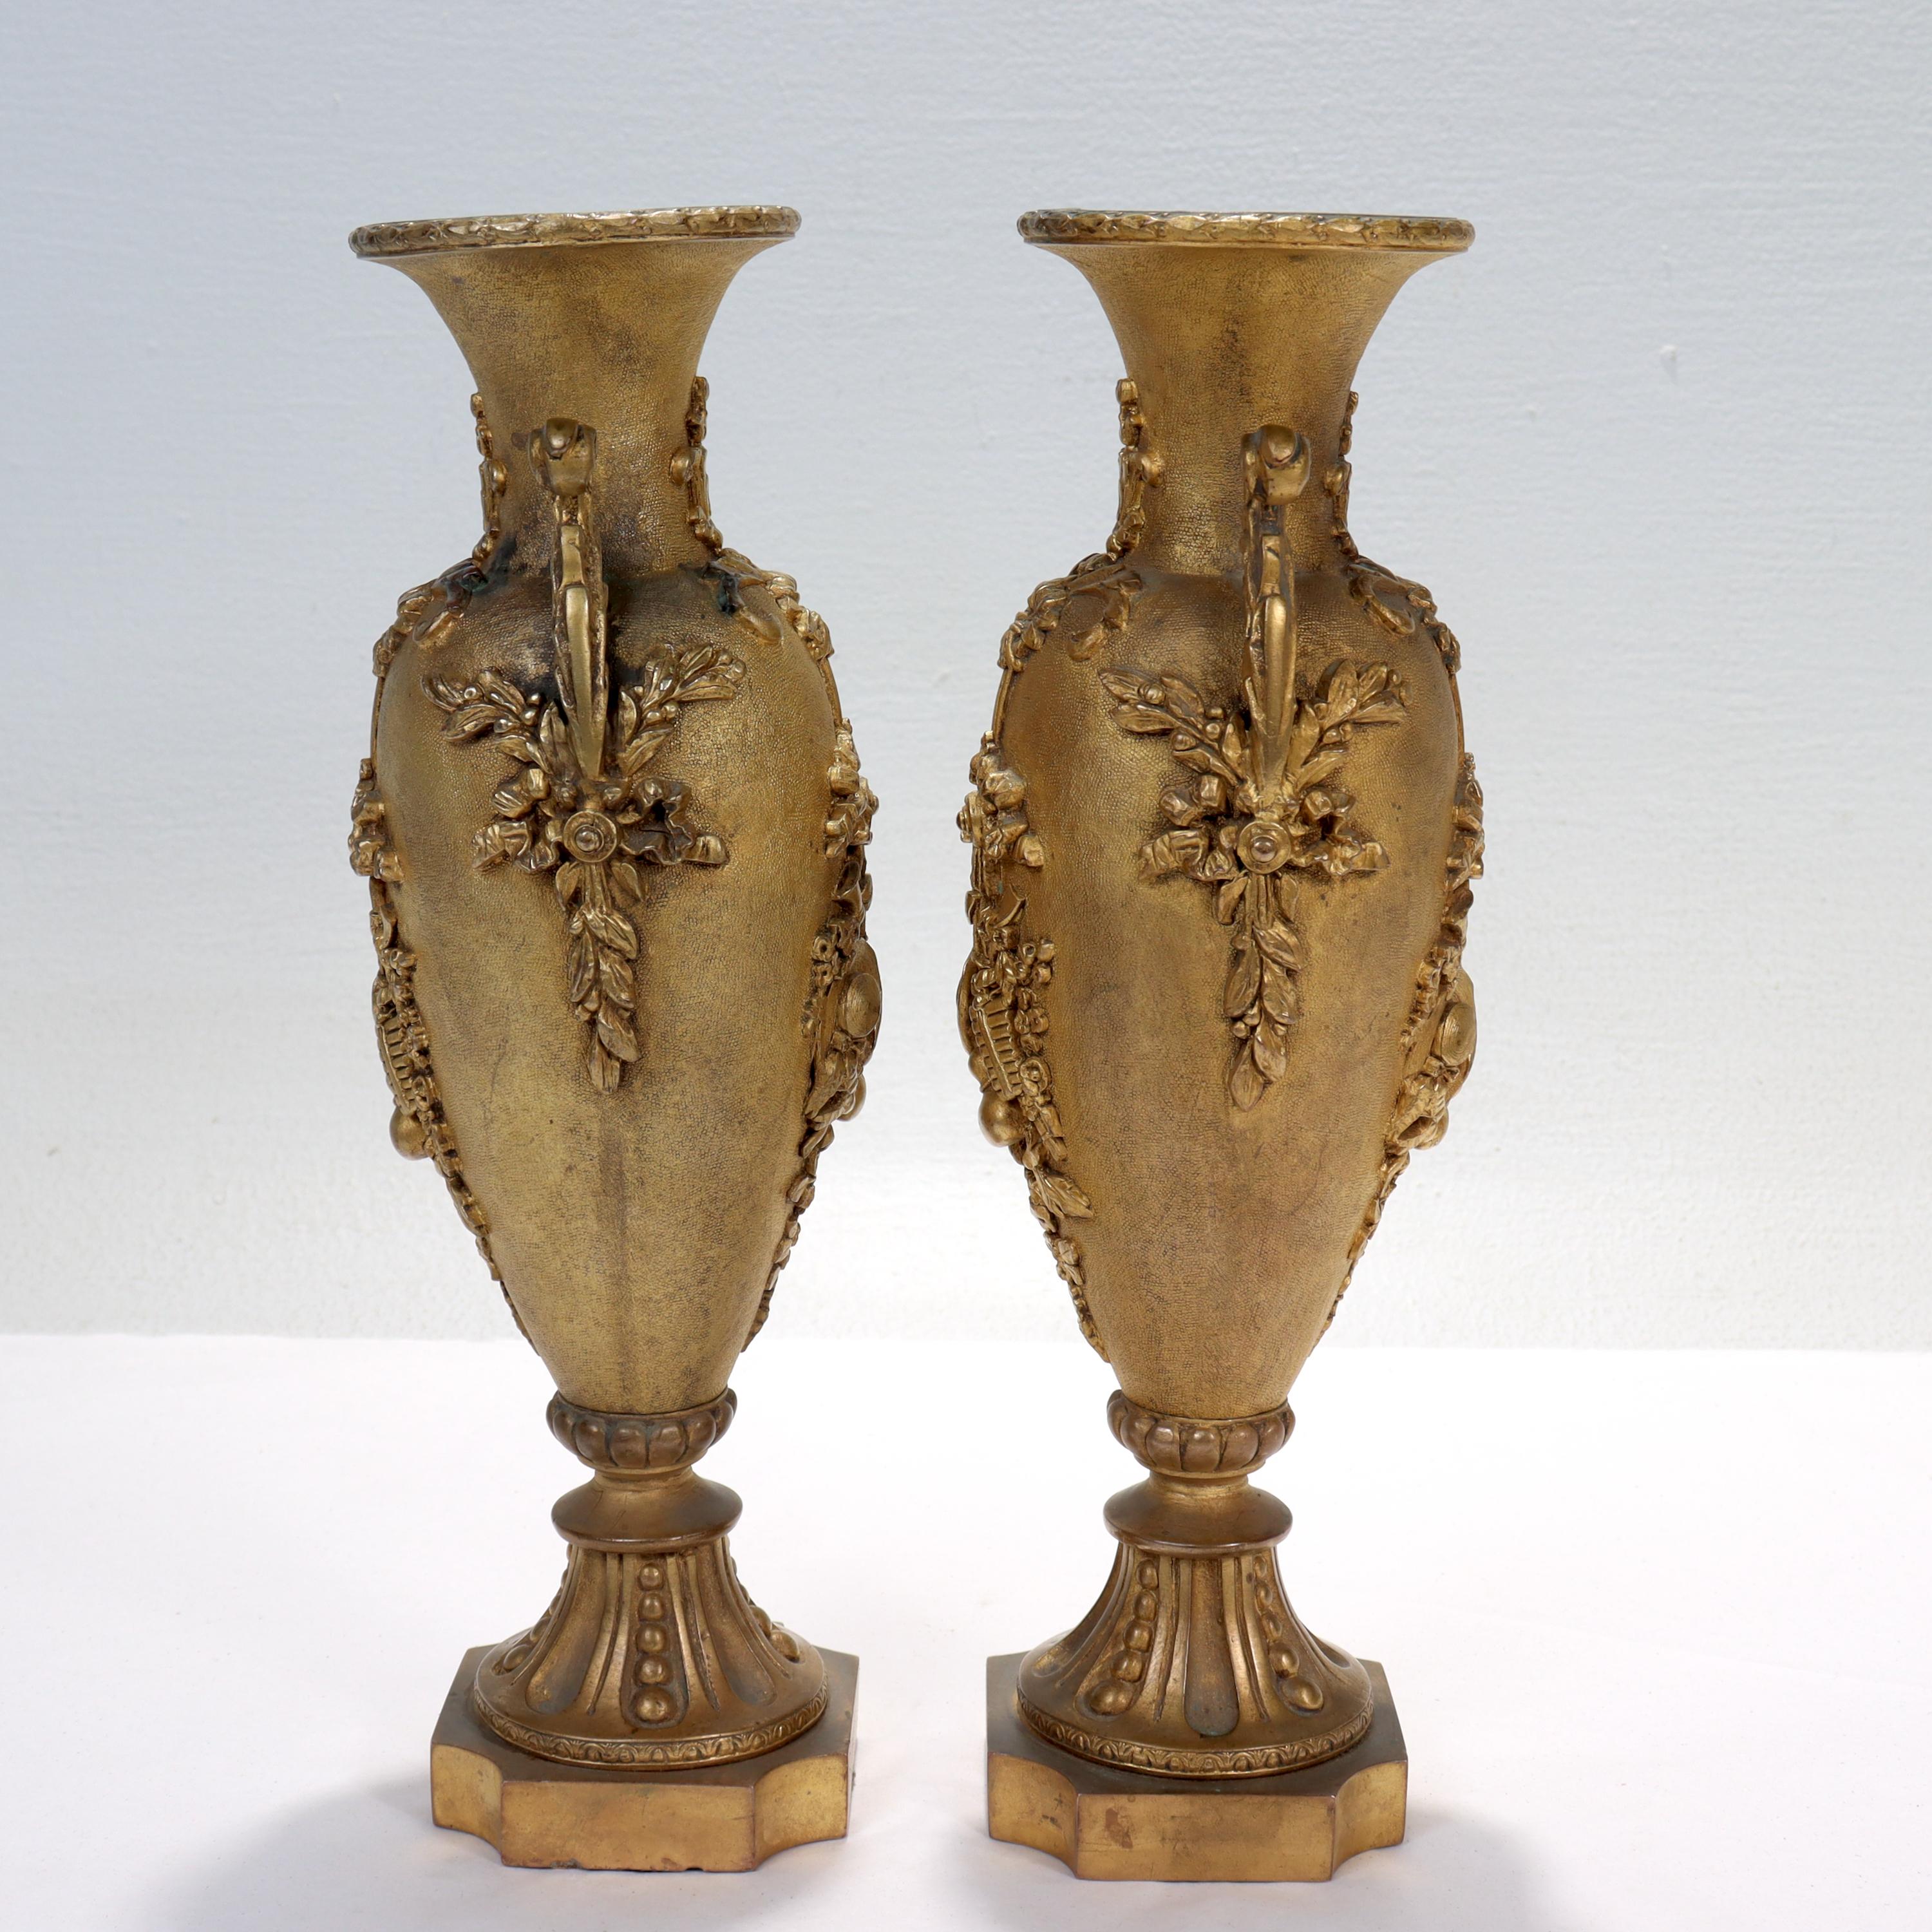 Empire Revival Antique Second Empire French Doré Gilt Bronze Vases or Urns For Sale